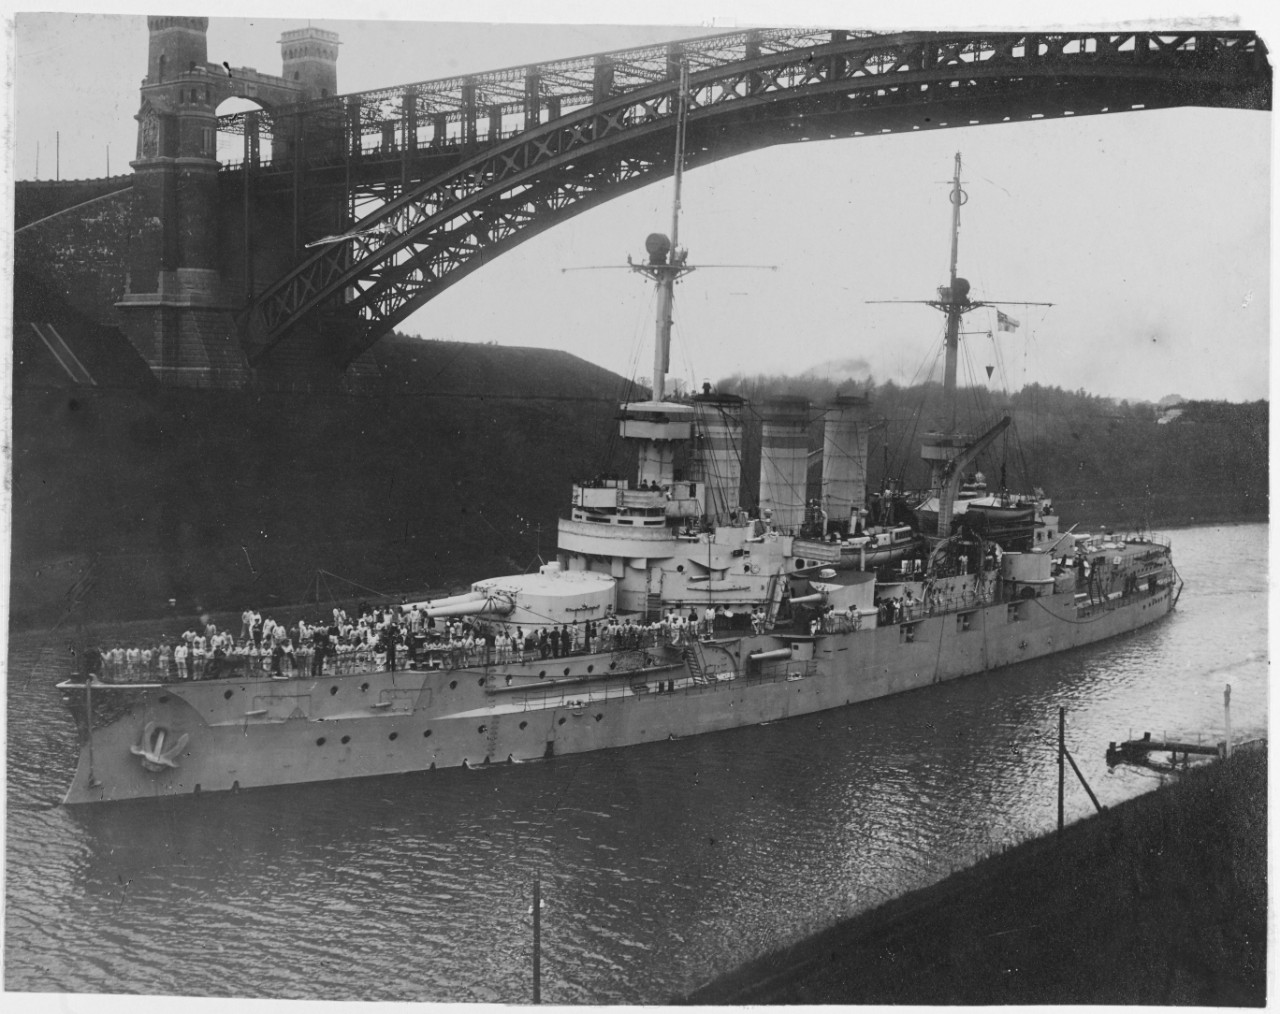 LOTHRINGEN (German battleship, 1904-1931)